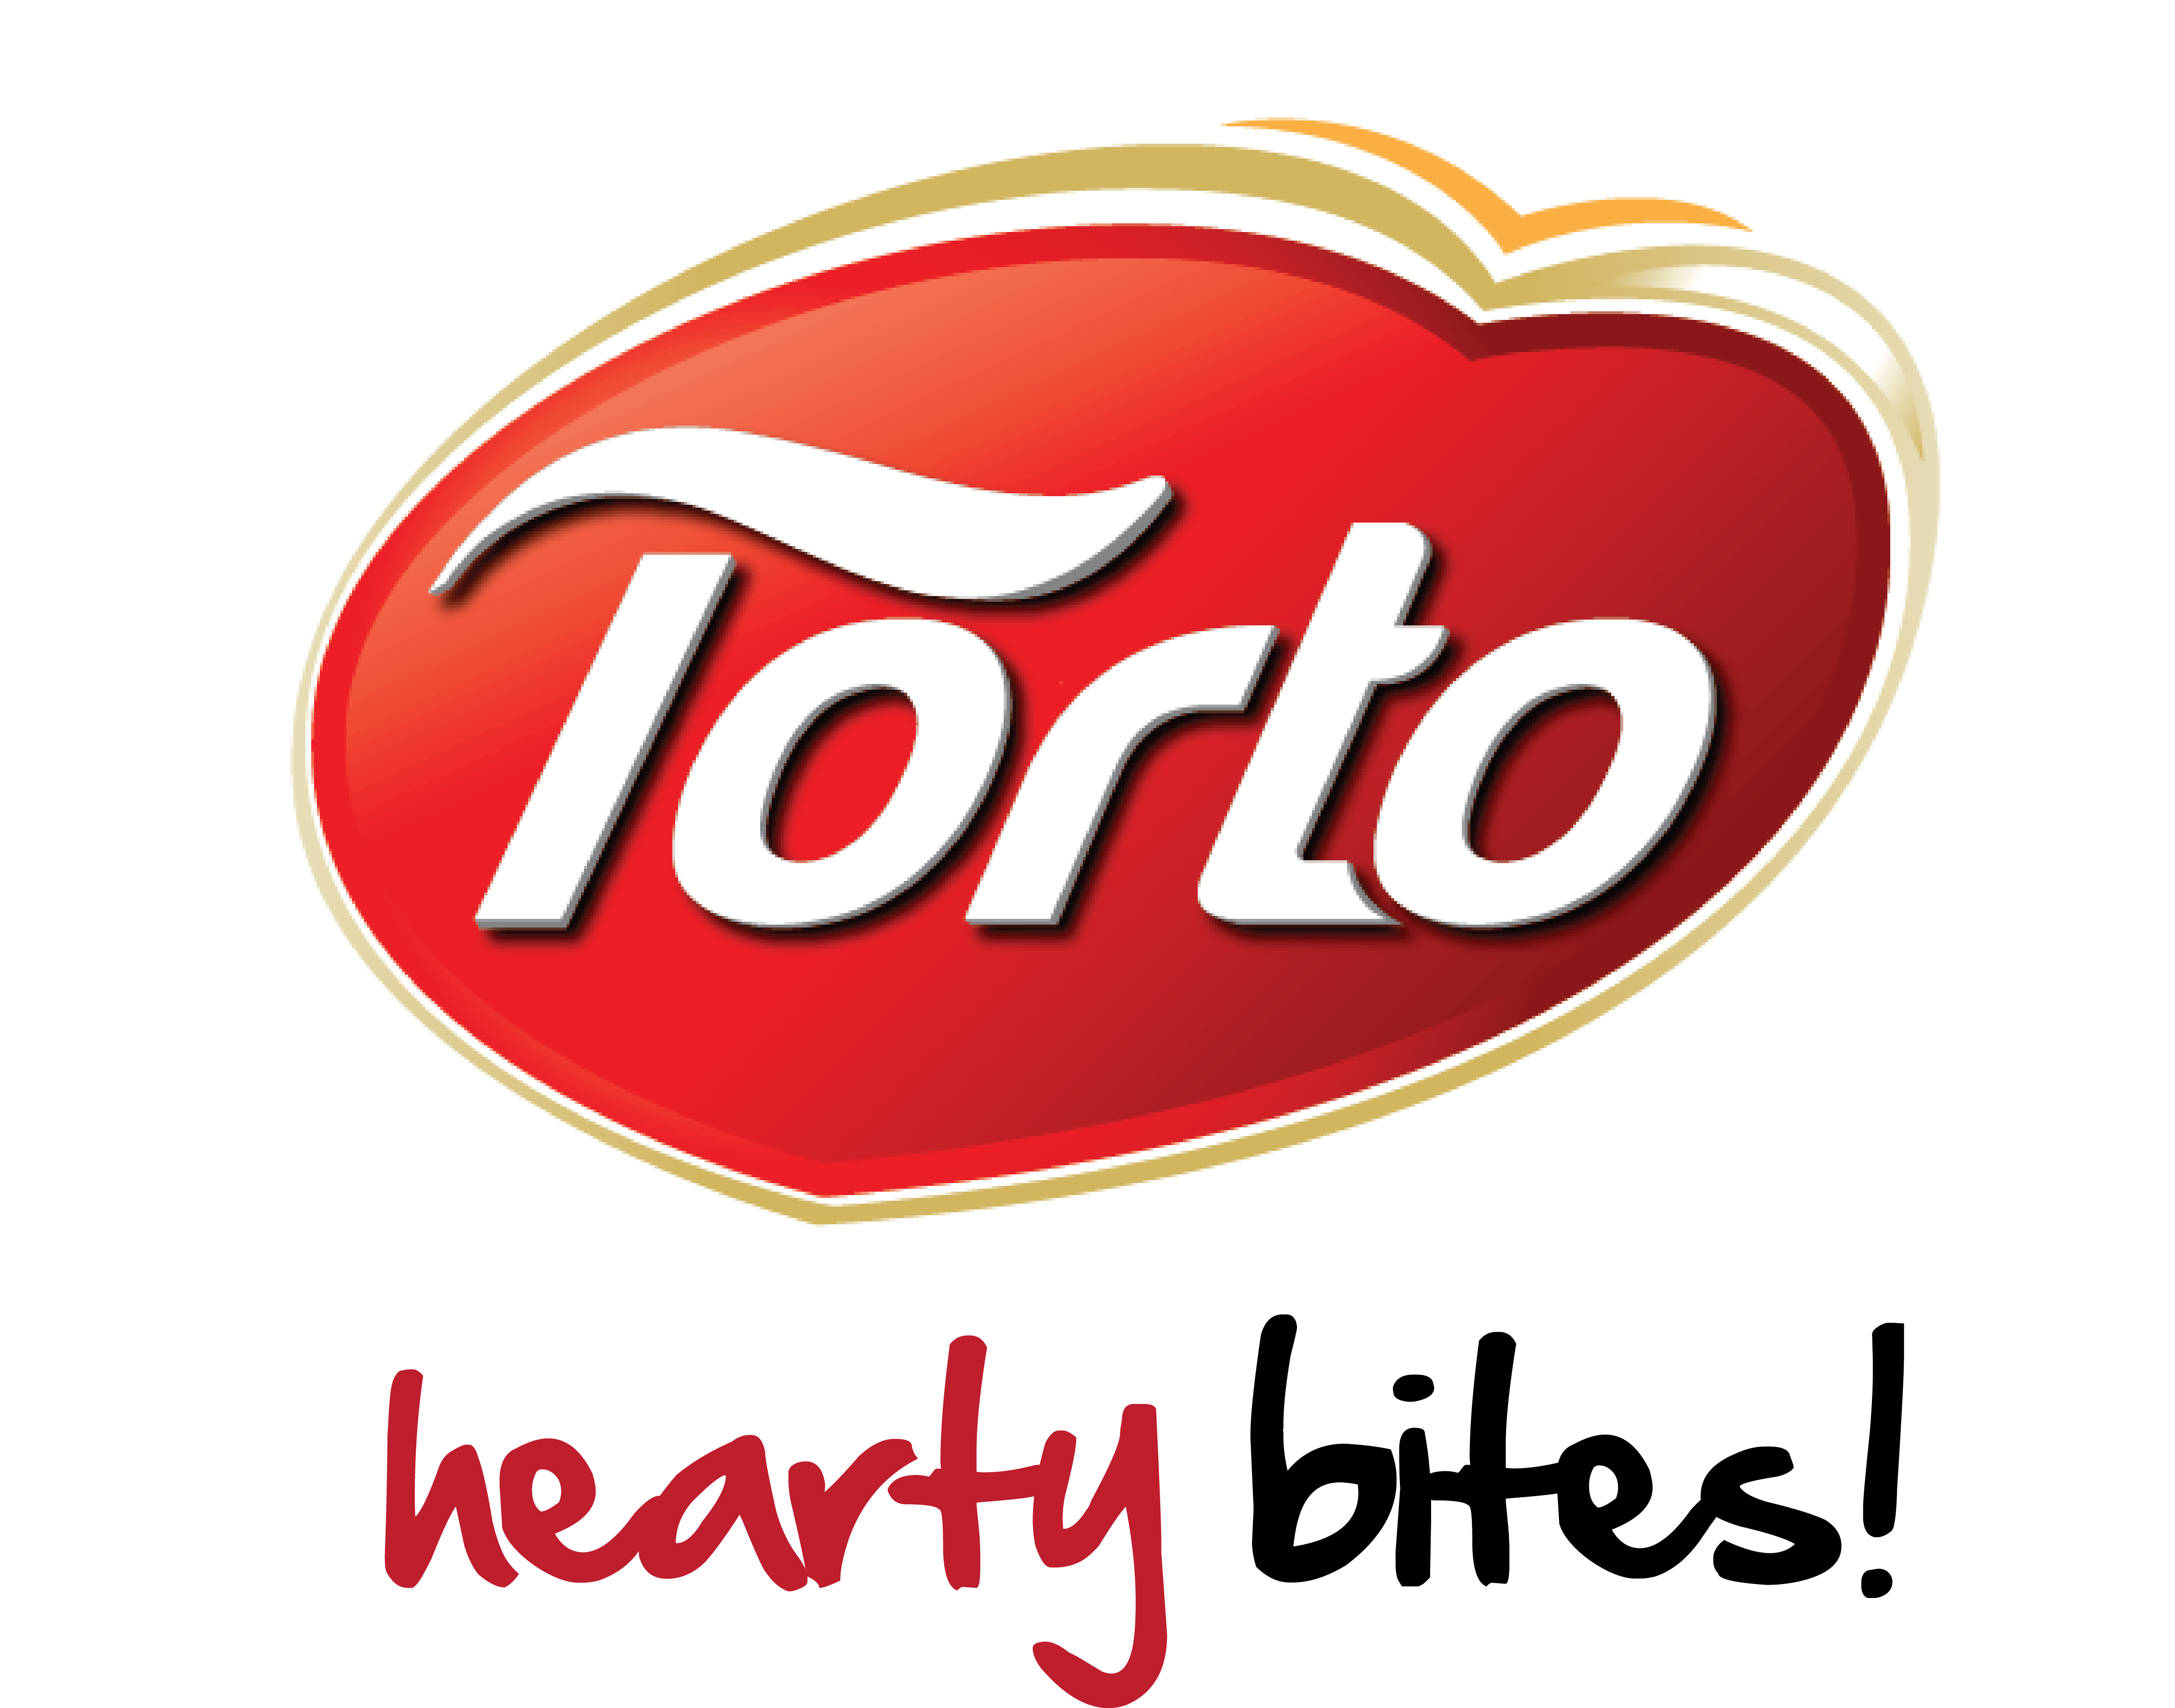 Food.com Logo - Torto Food Industries. Hearty Taste In Every Bite